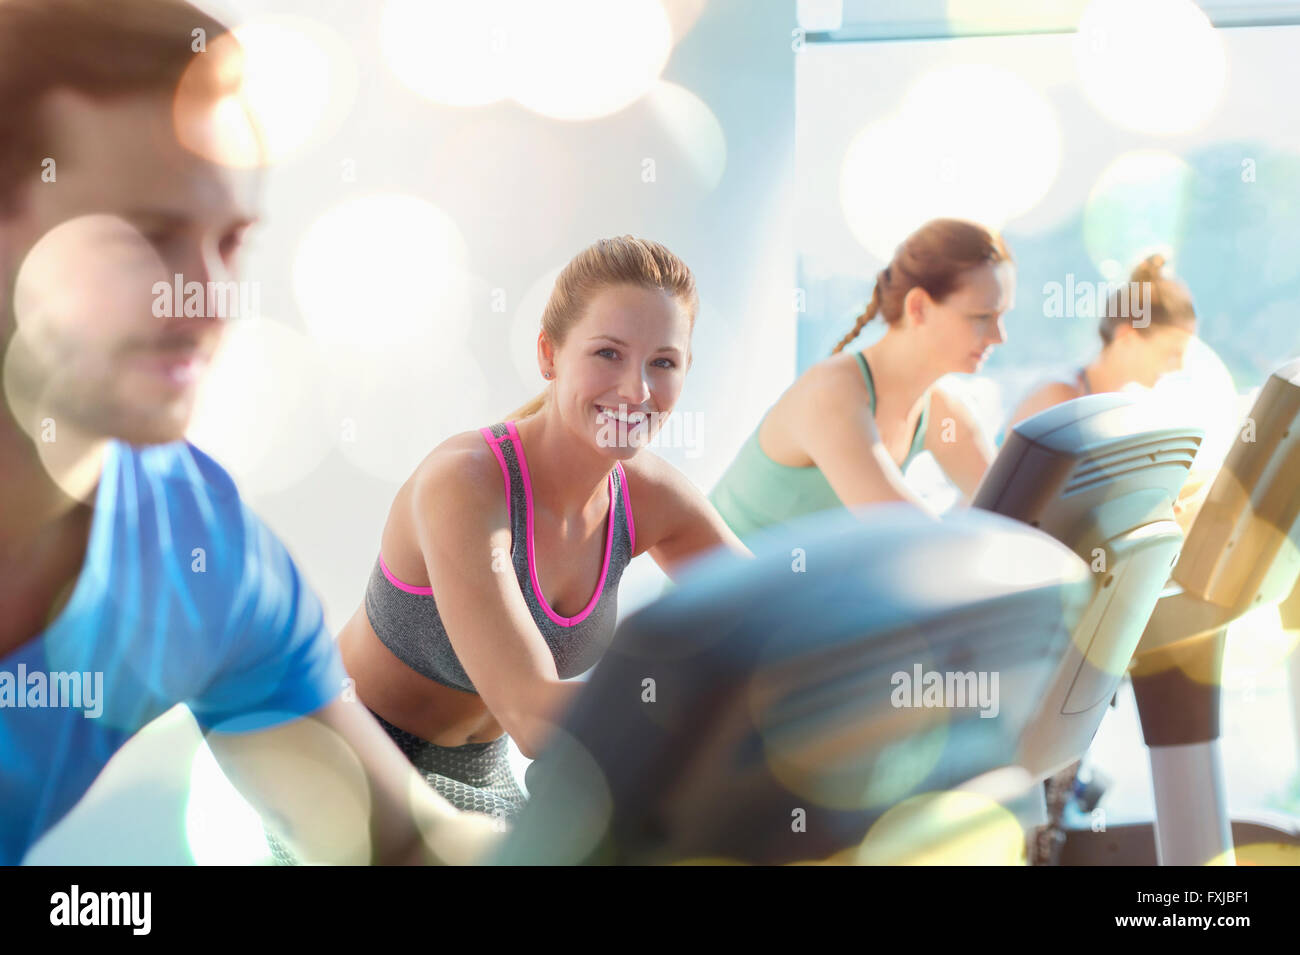 Smiling woman riding exercise bike at gym Stock Photo